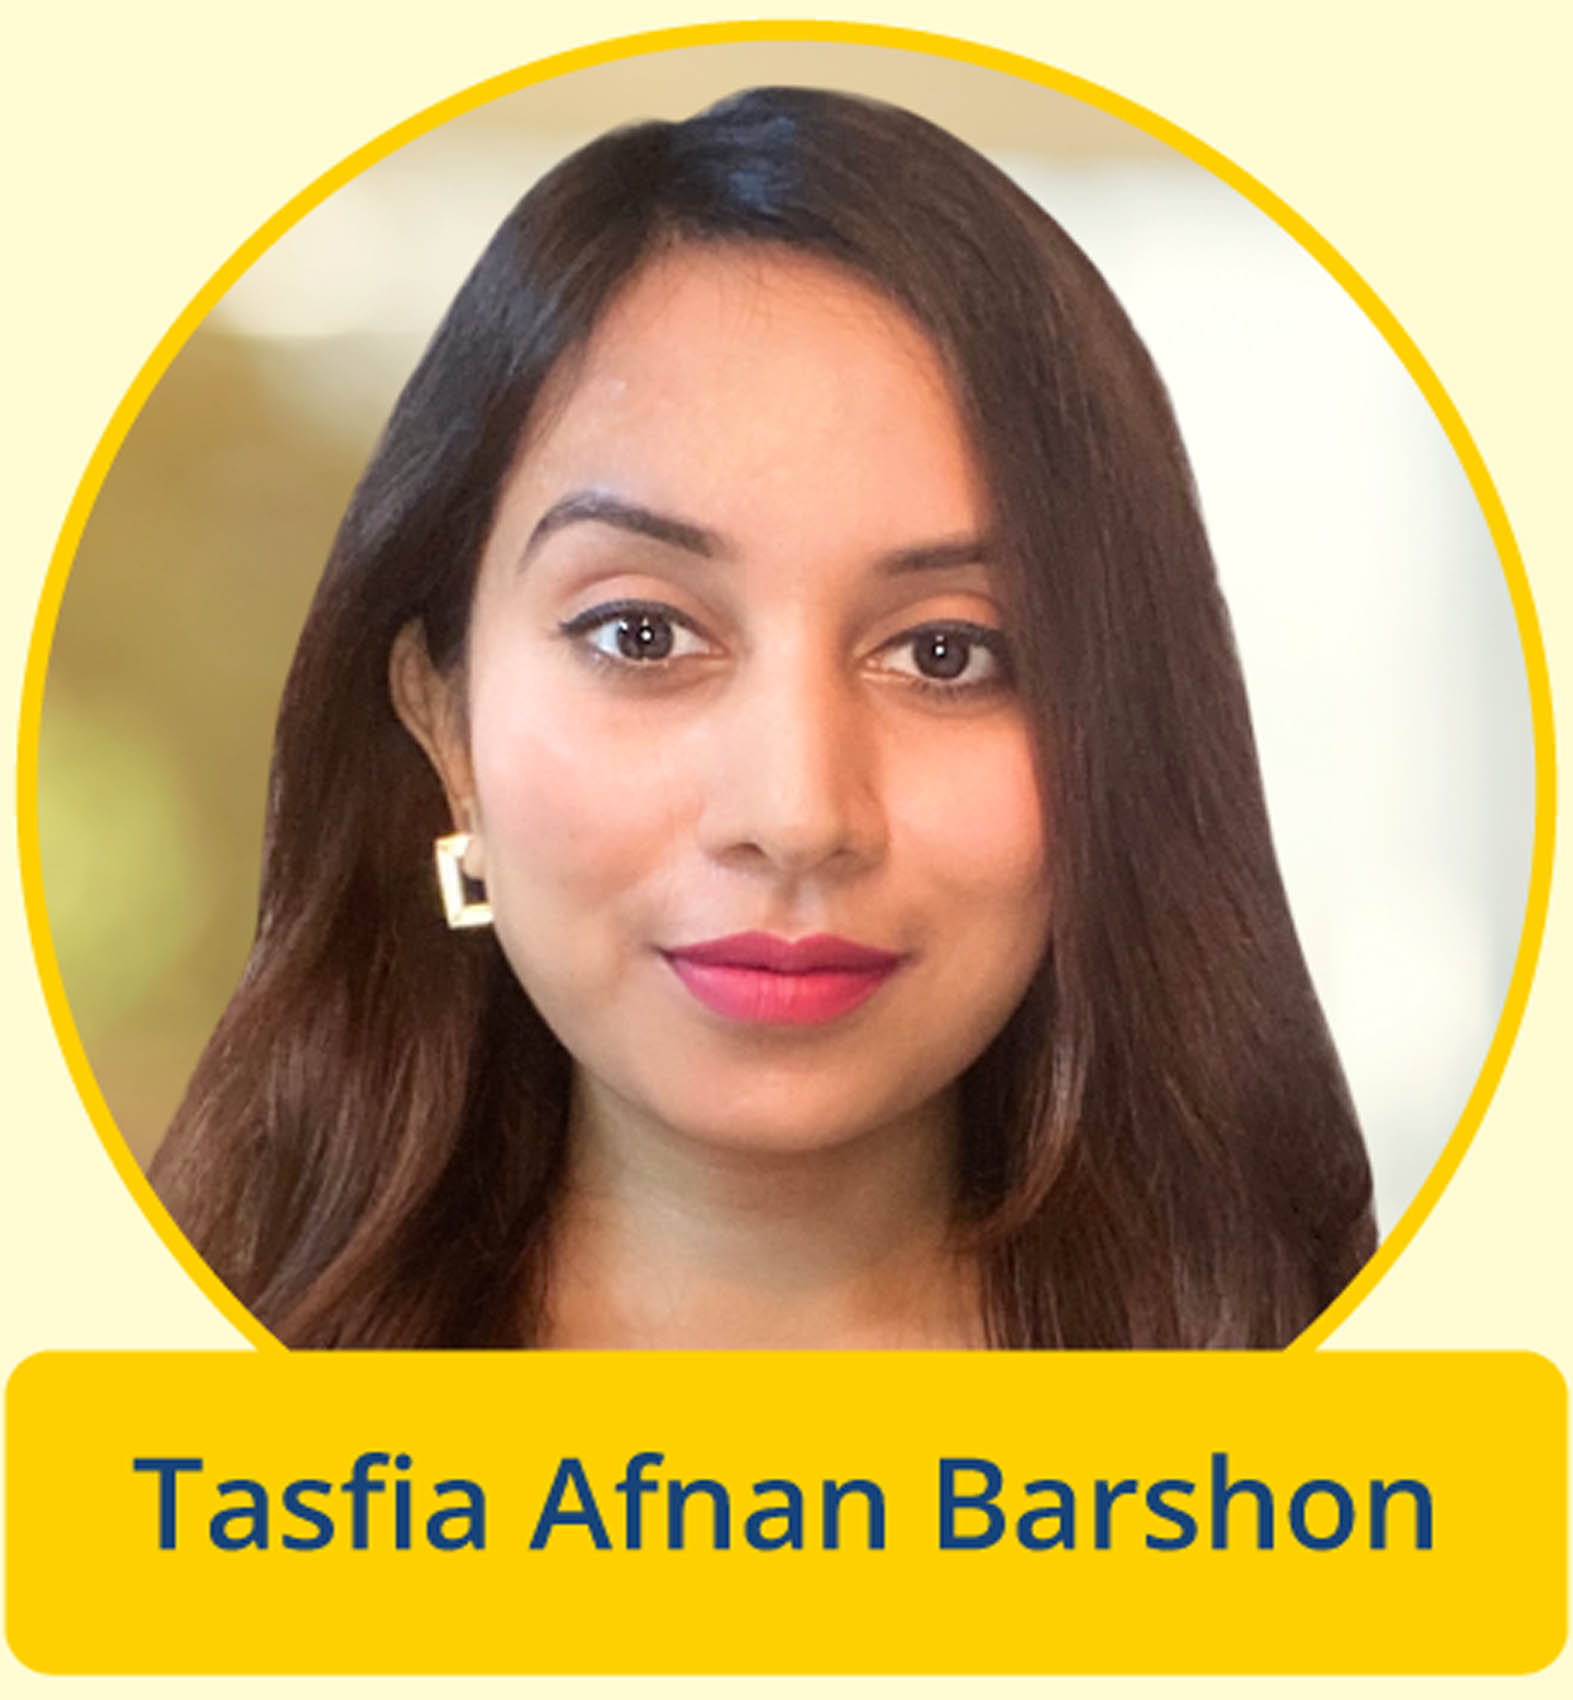 Tasfia Afnan Barshon